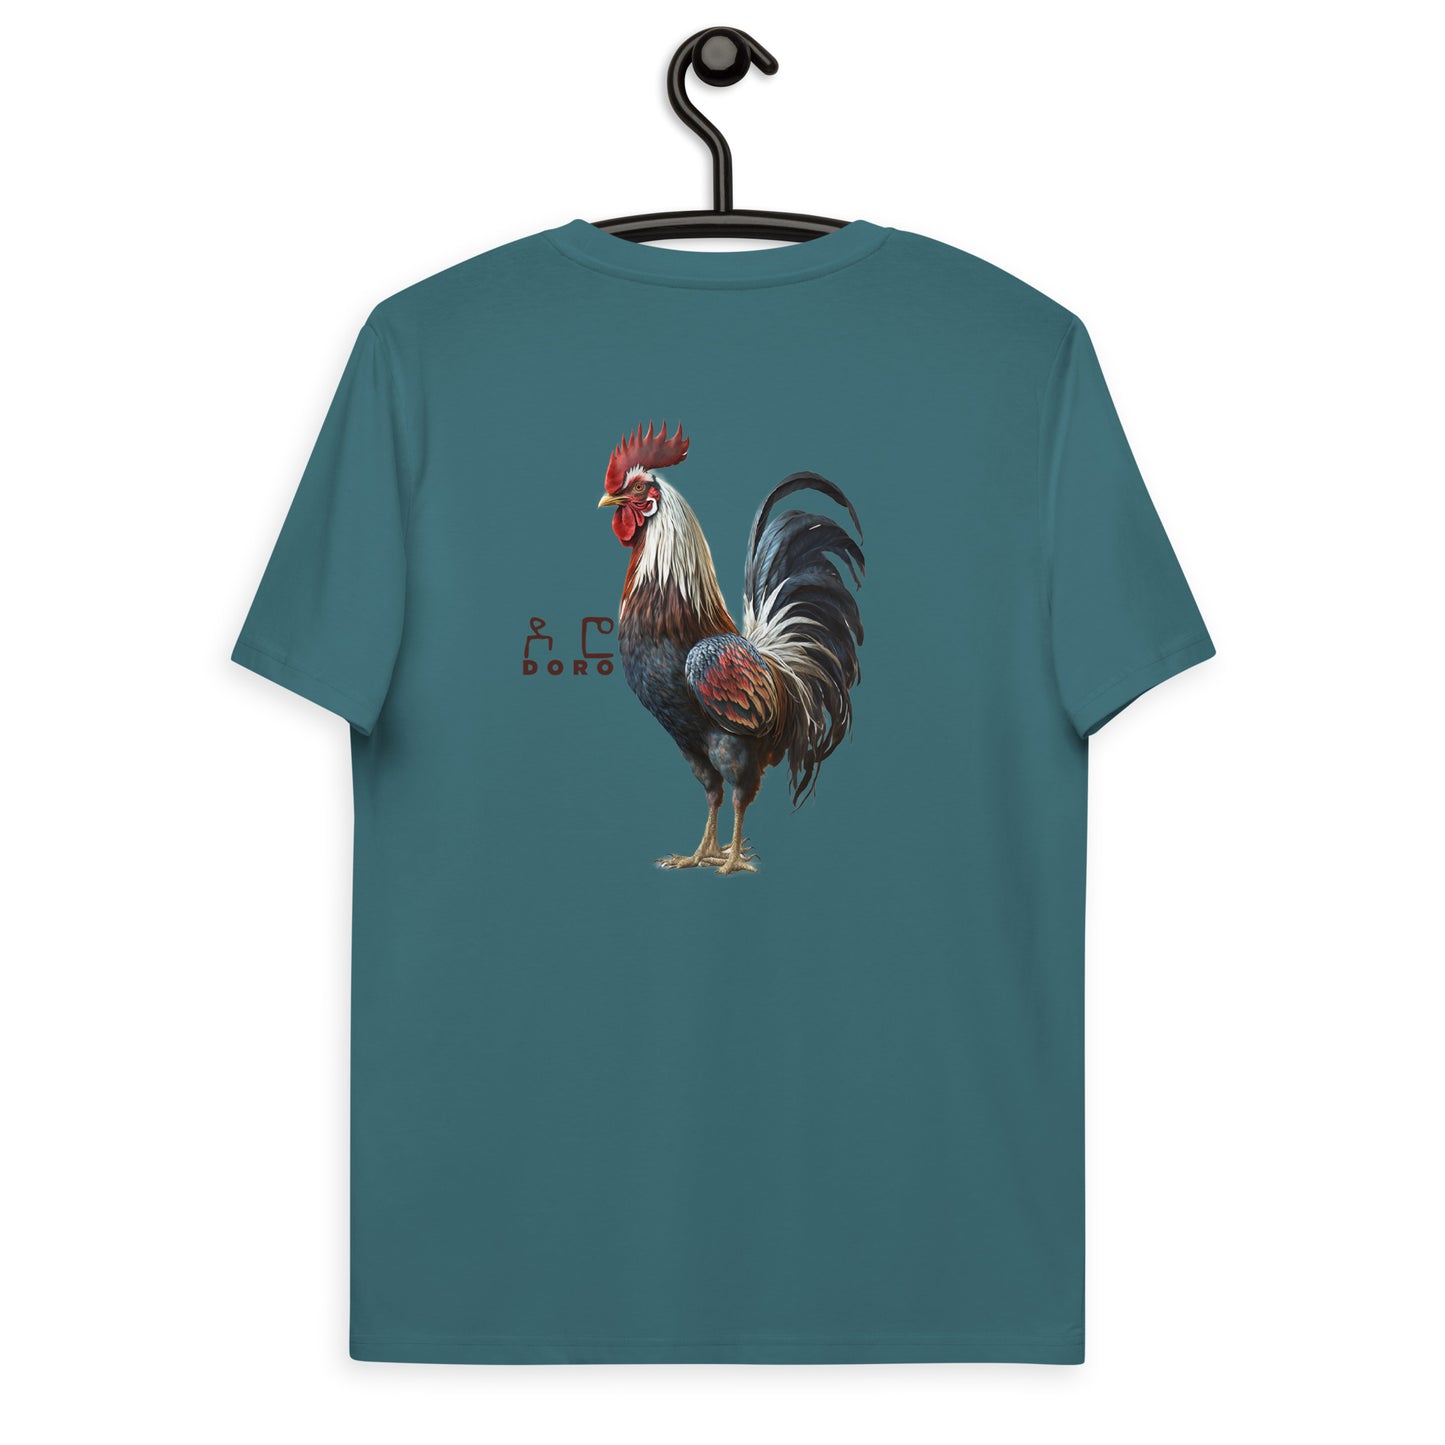 Doro ዶሮ - organic cotton t-shirt